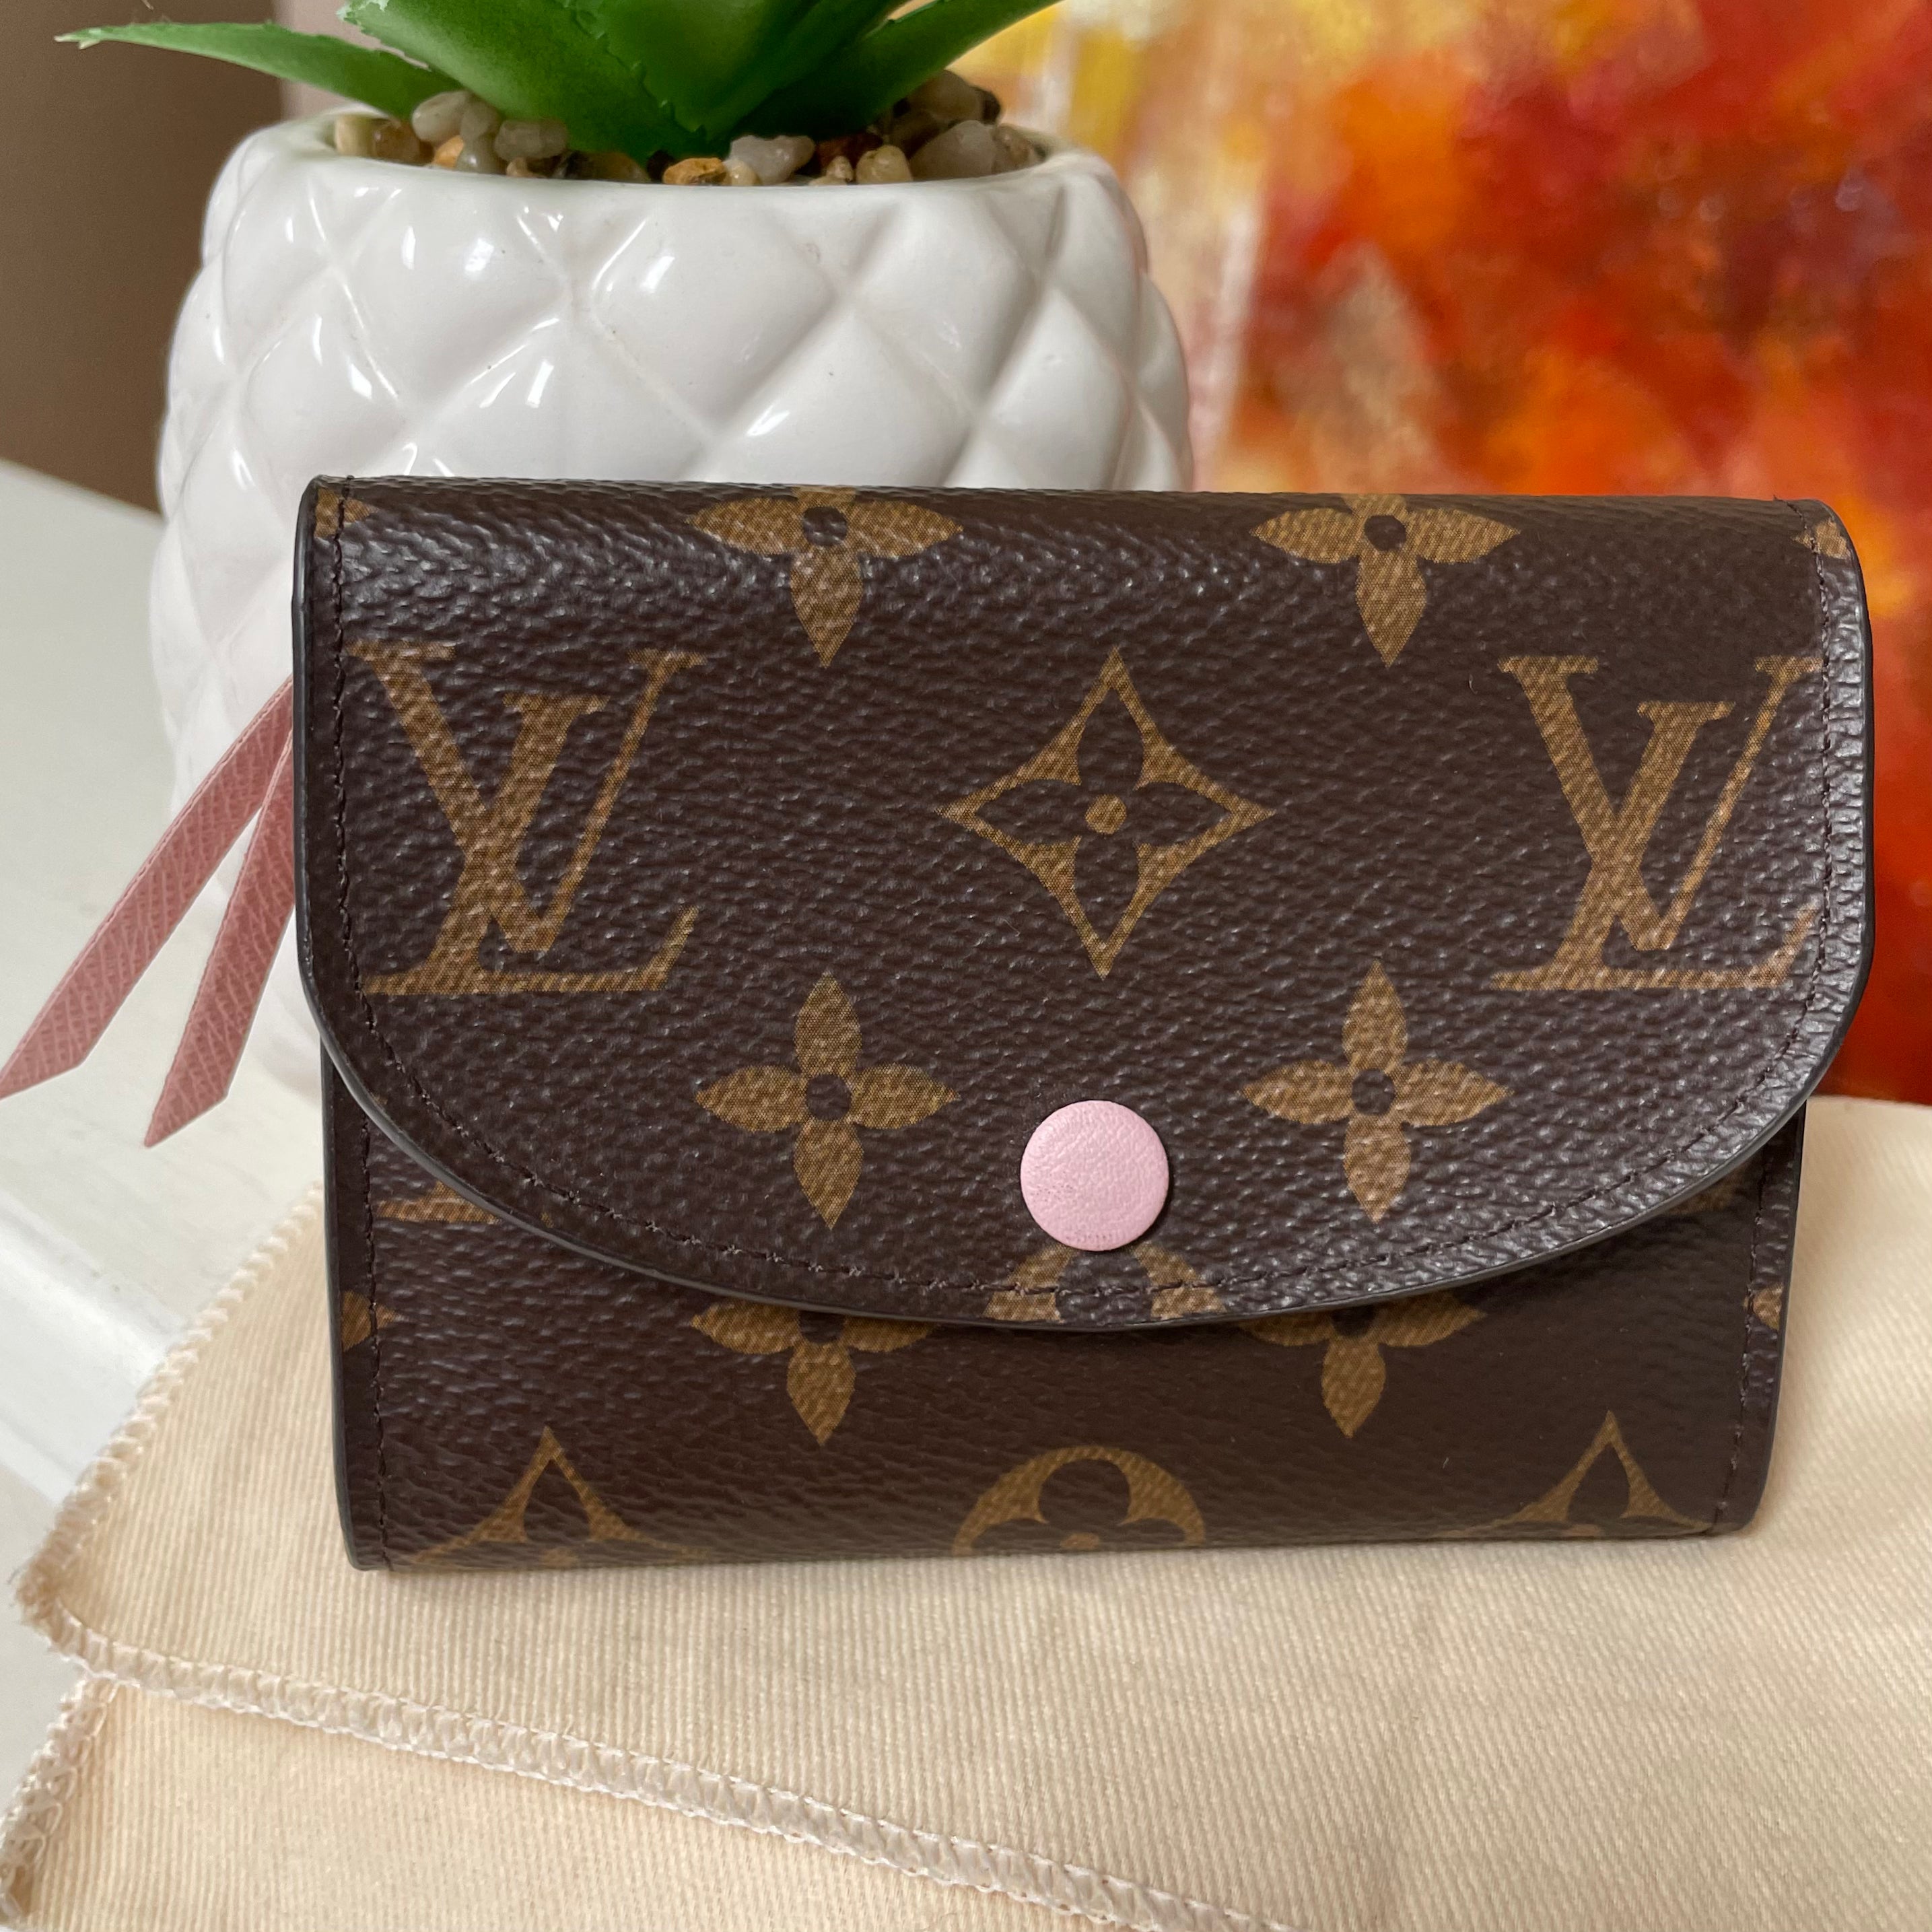 Louis Vuitton Rosalie Coin Purse Monogram Rose Ballerine – Coco Approved  Studio